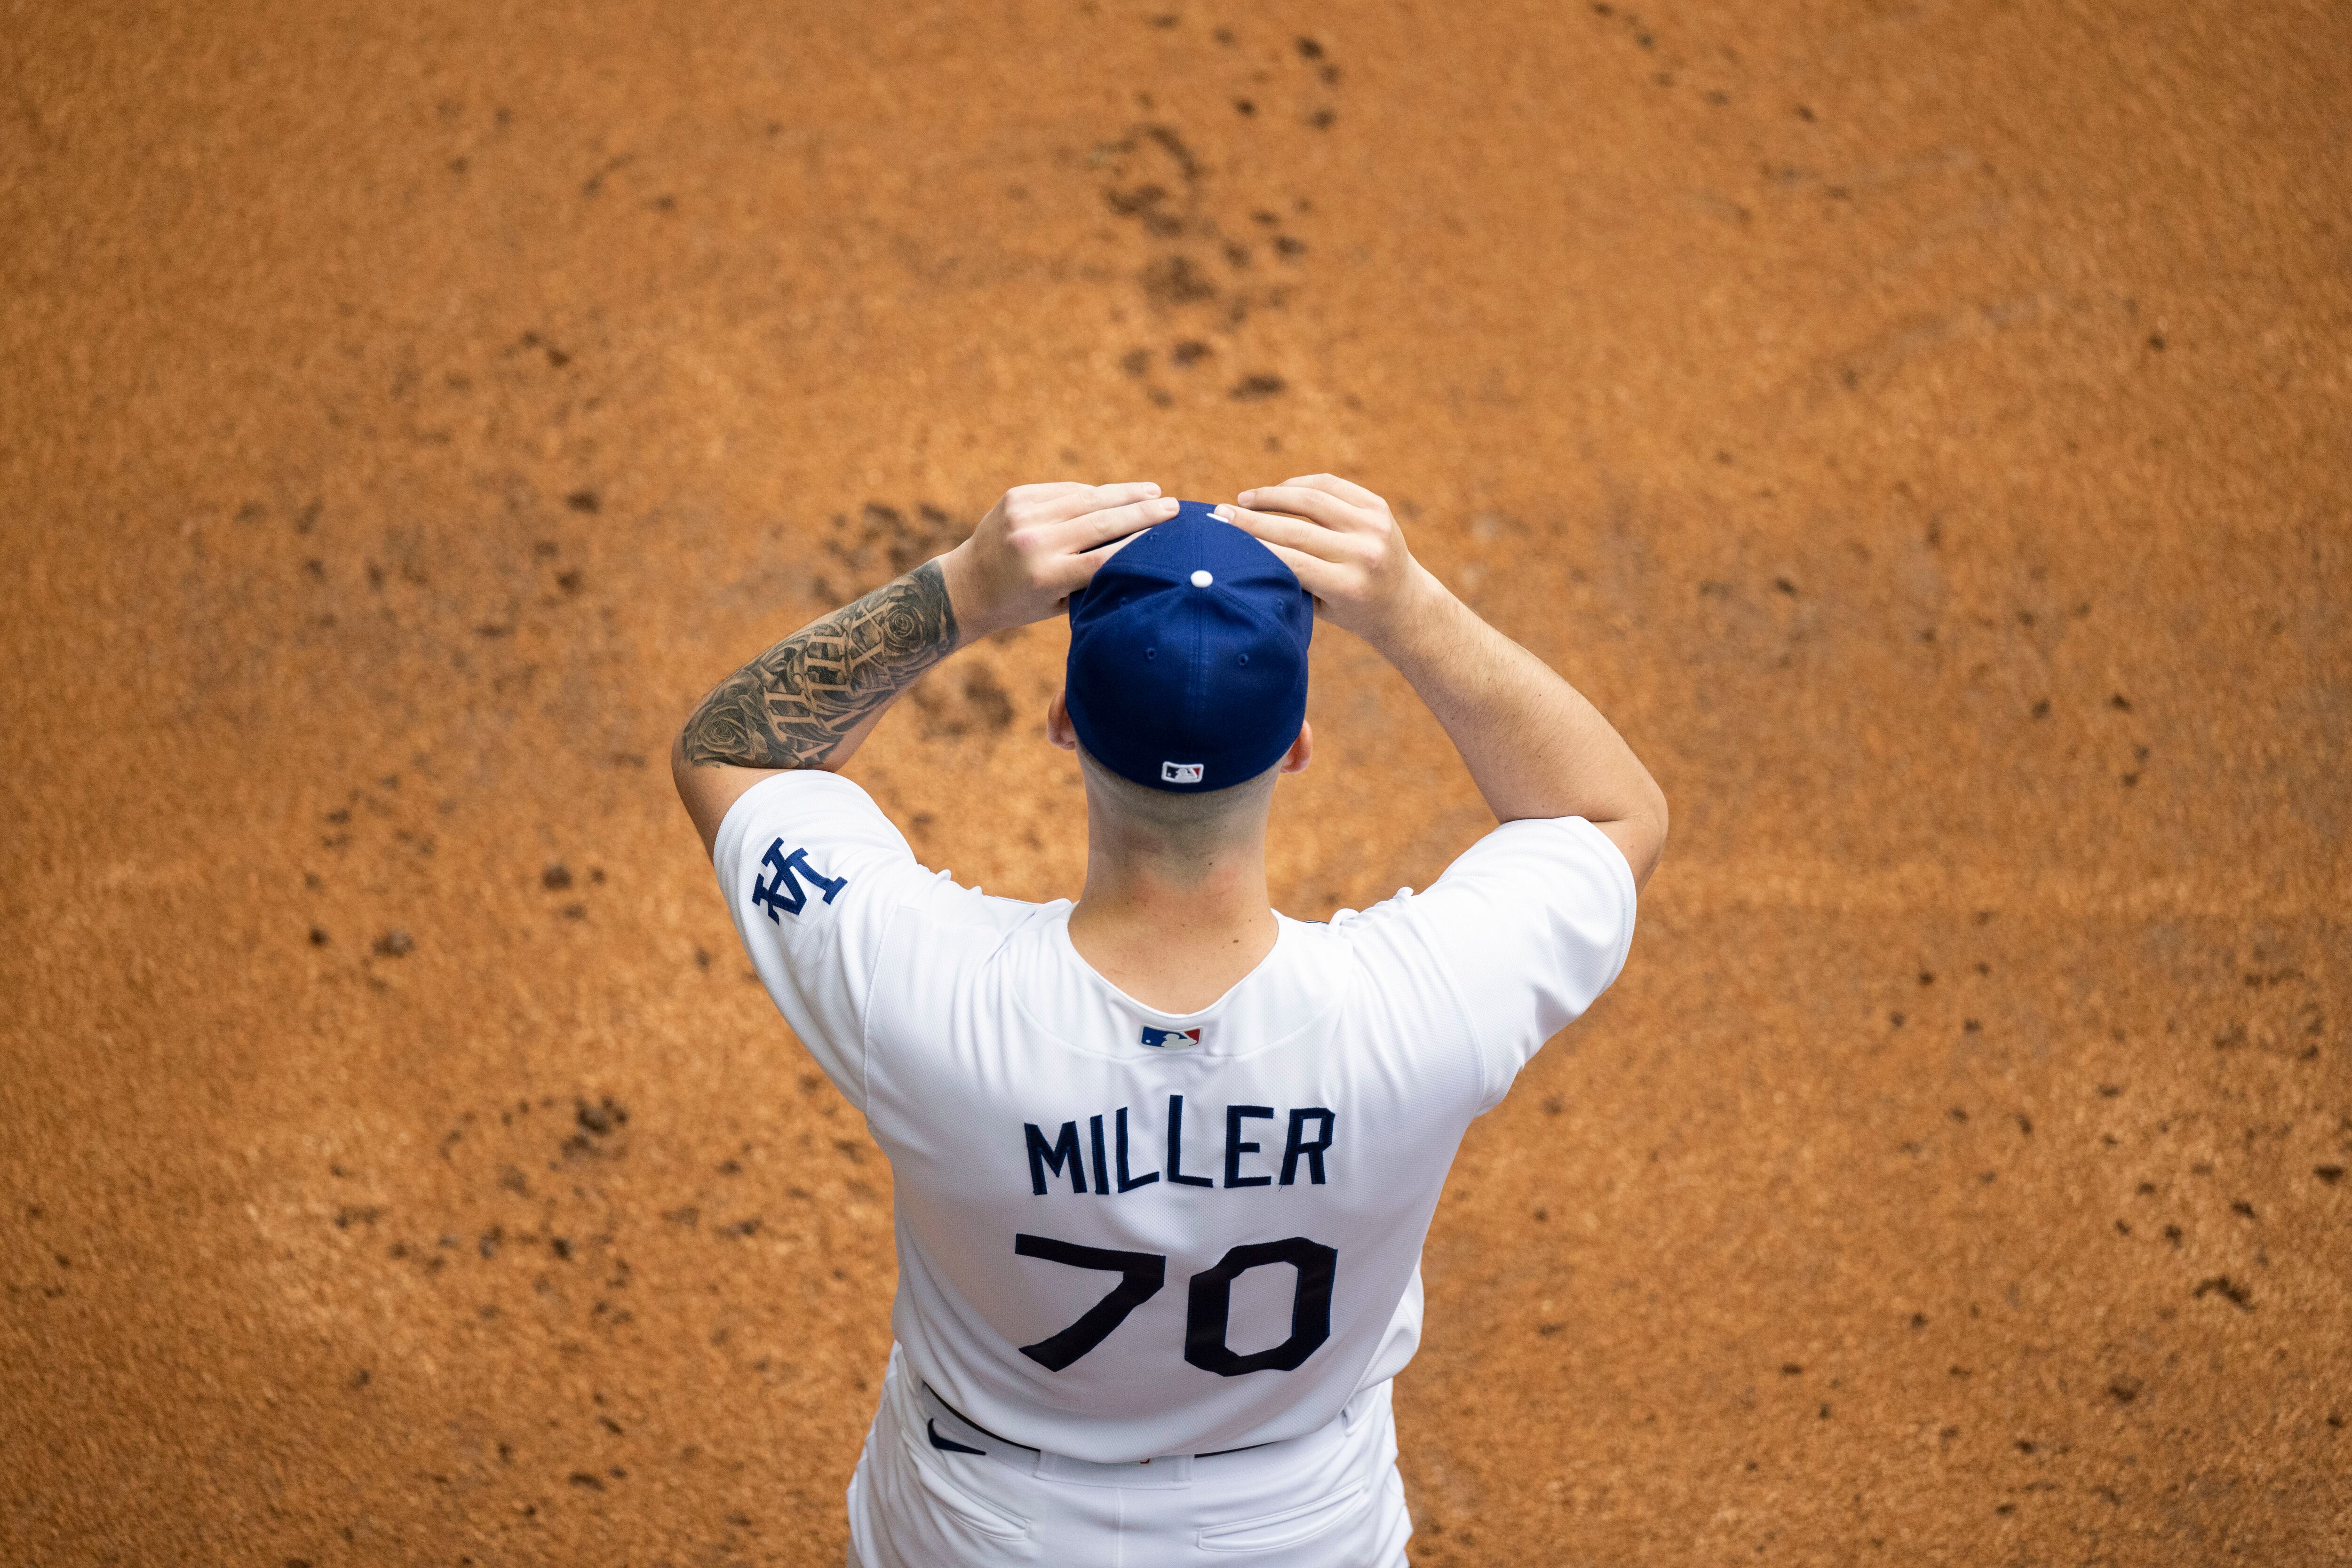 Miller shines in Dodgers' 6-1 win over Nationals